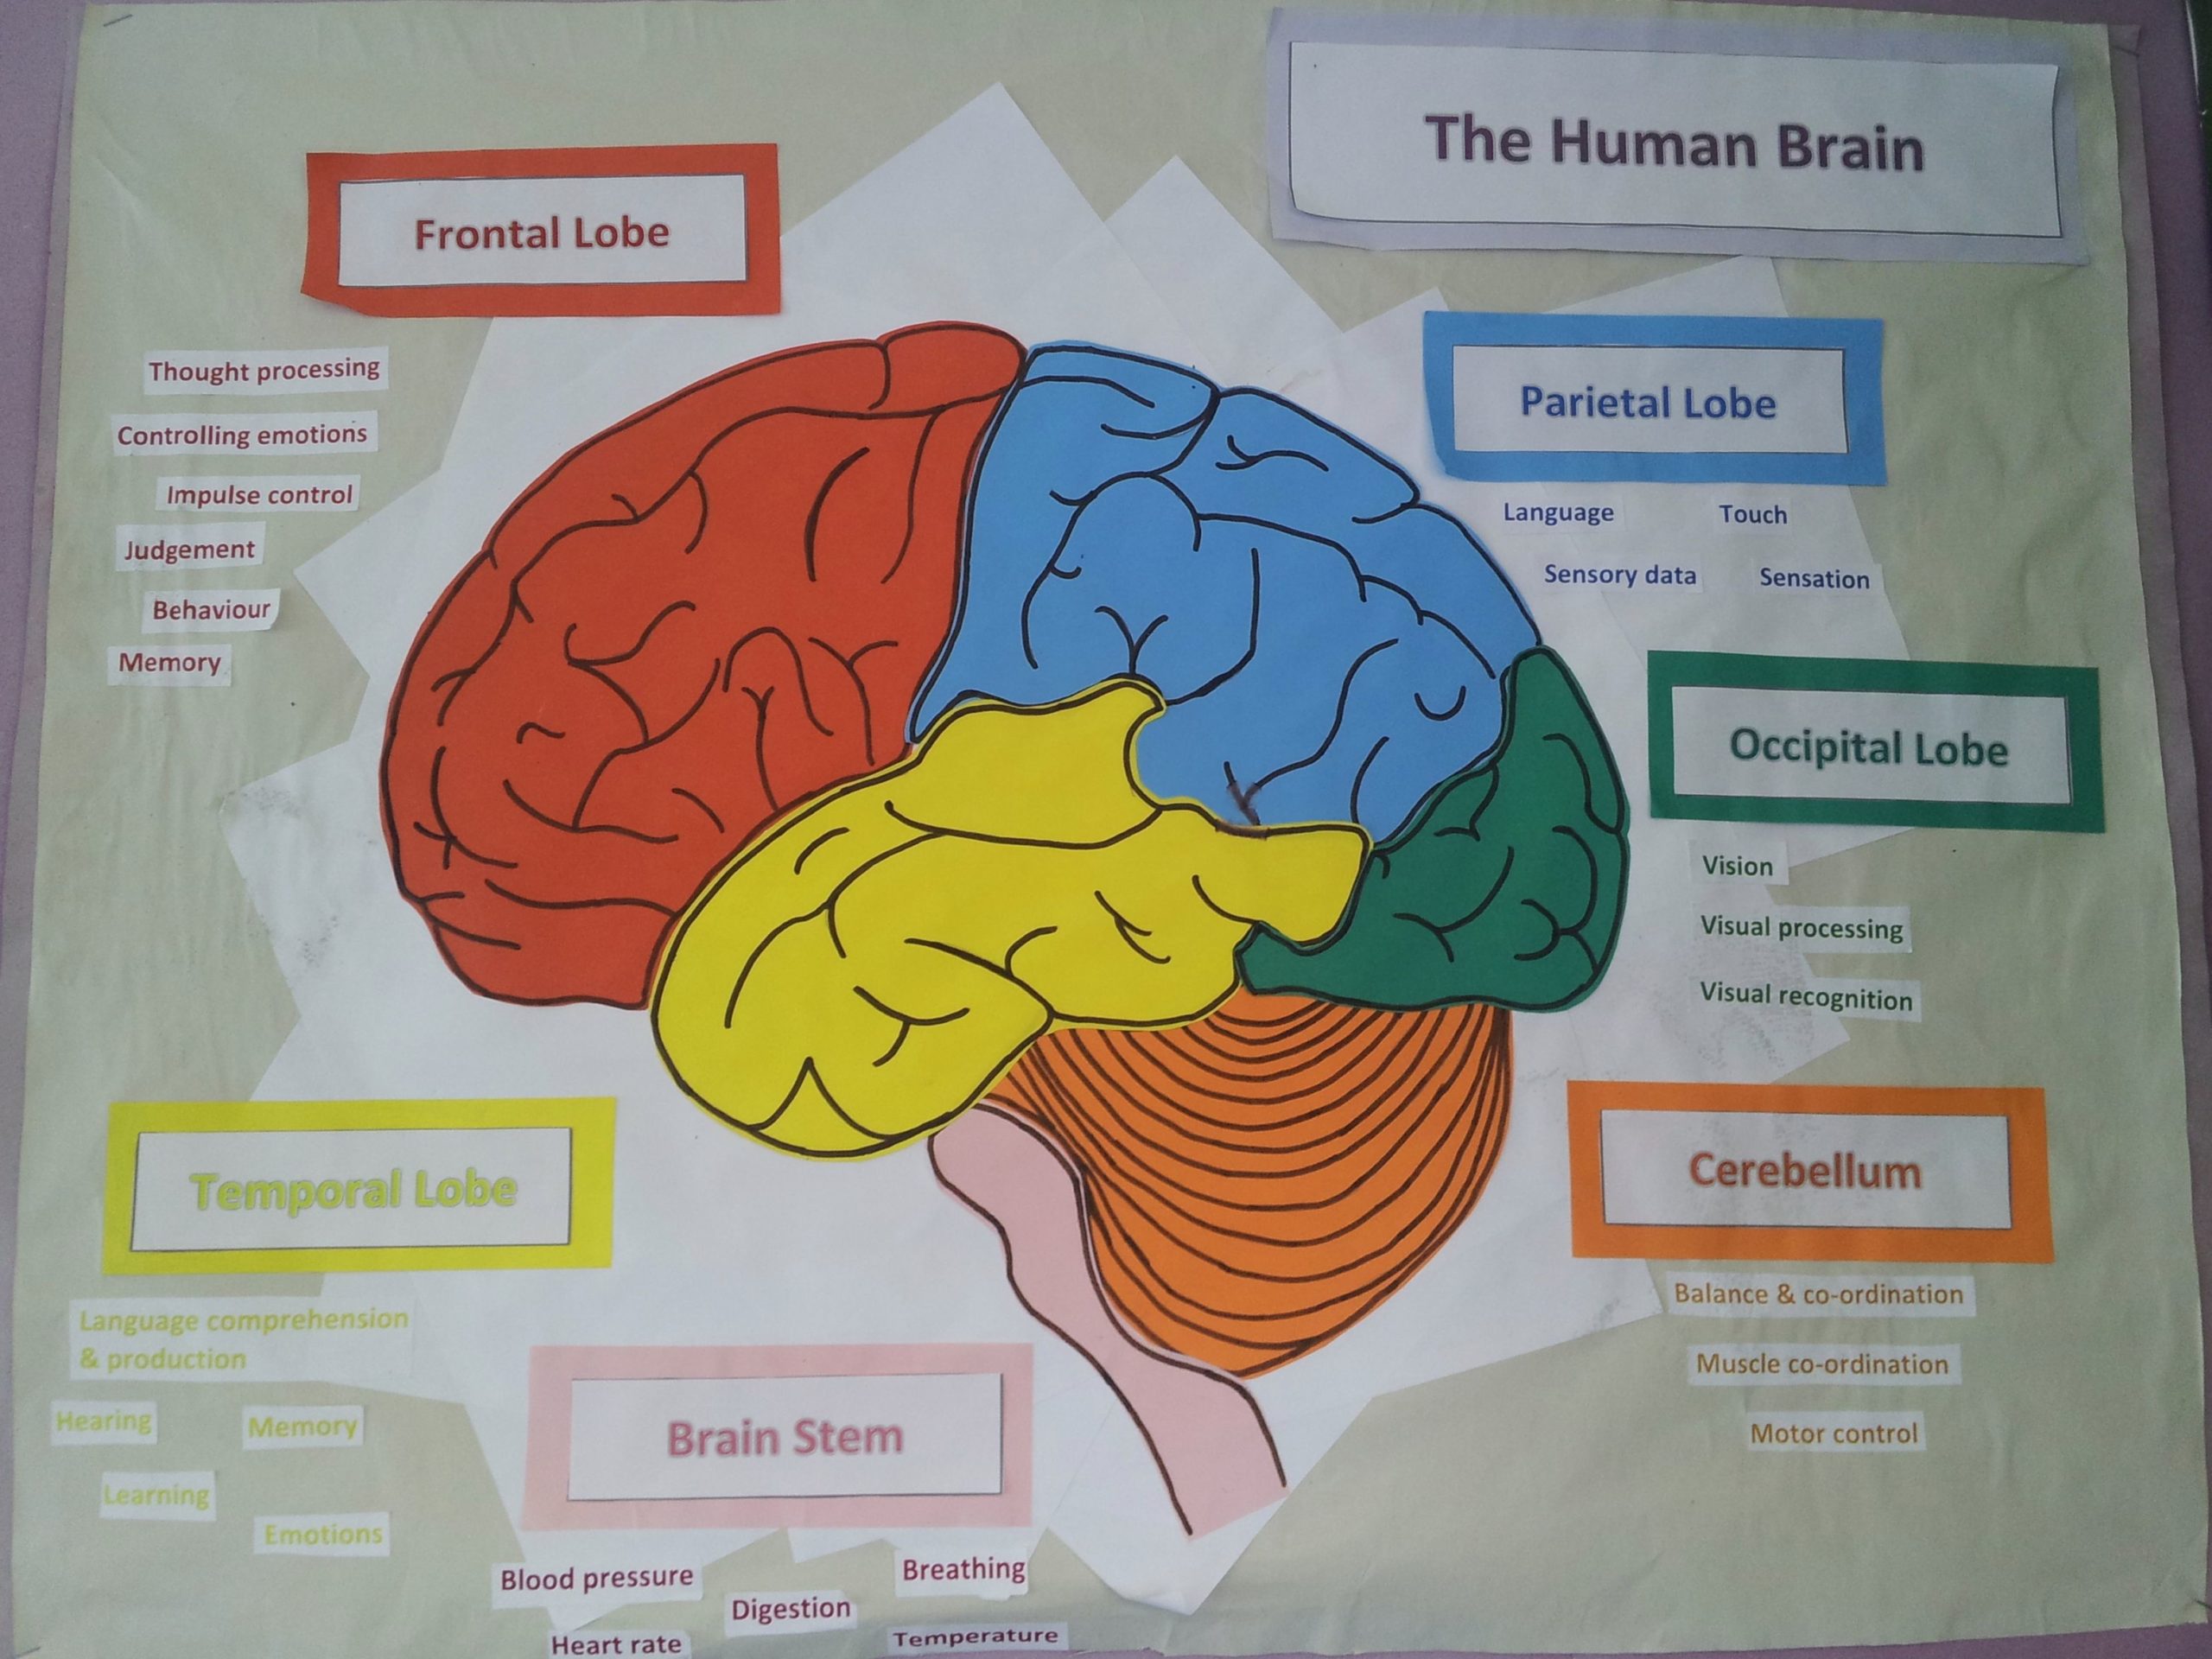 Human brain explained